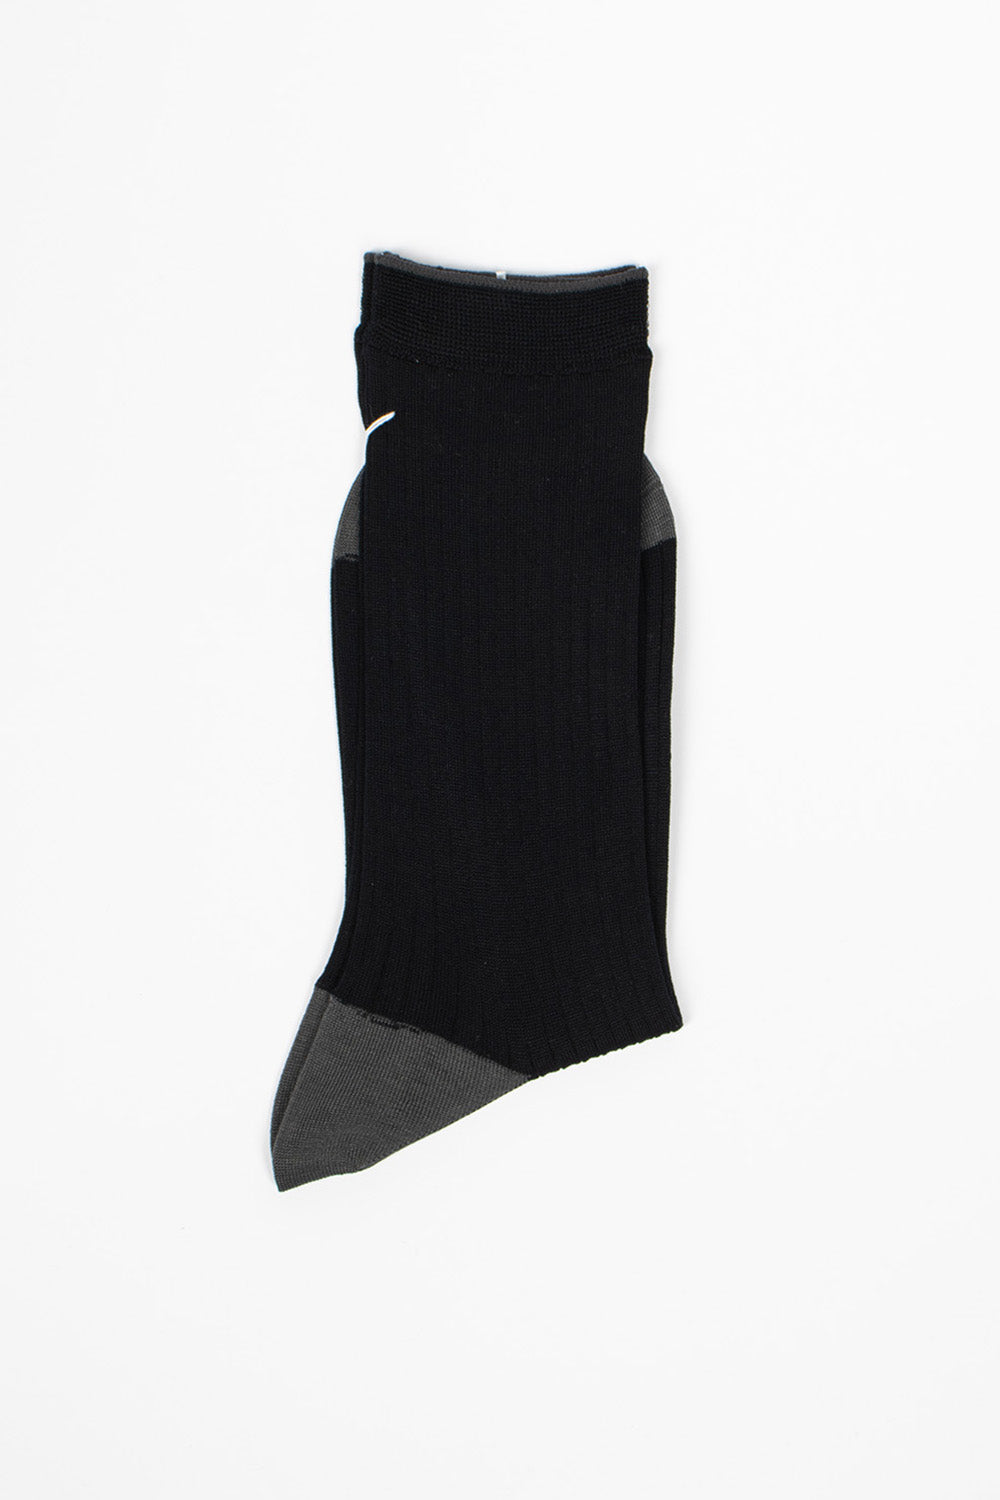 ANP-121 Rib Socks Black/Grey